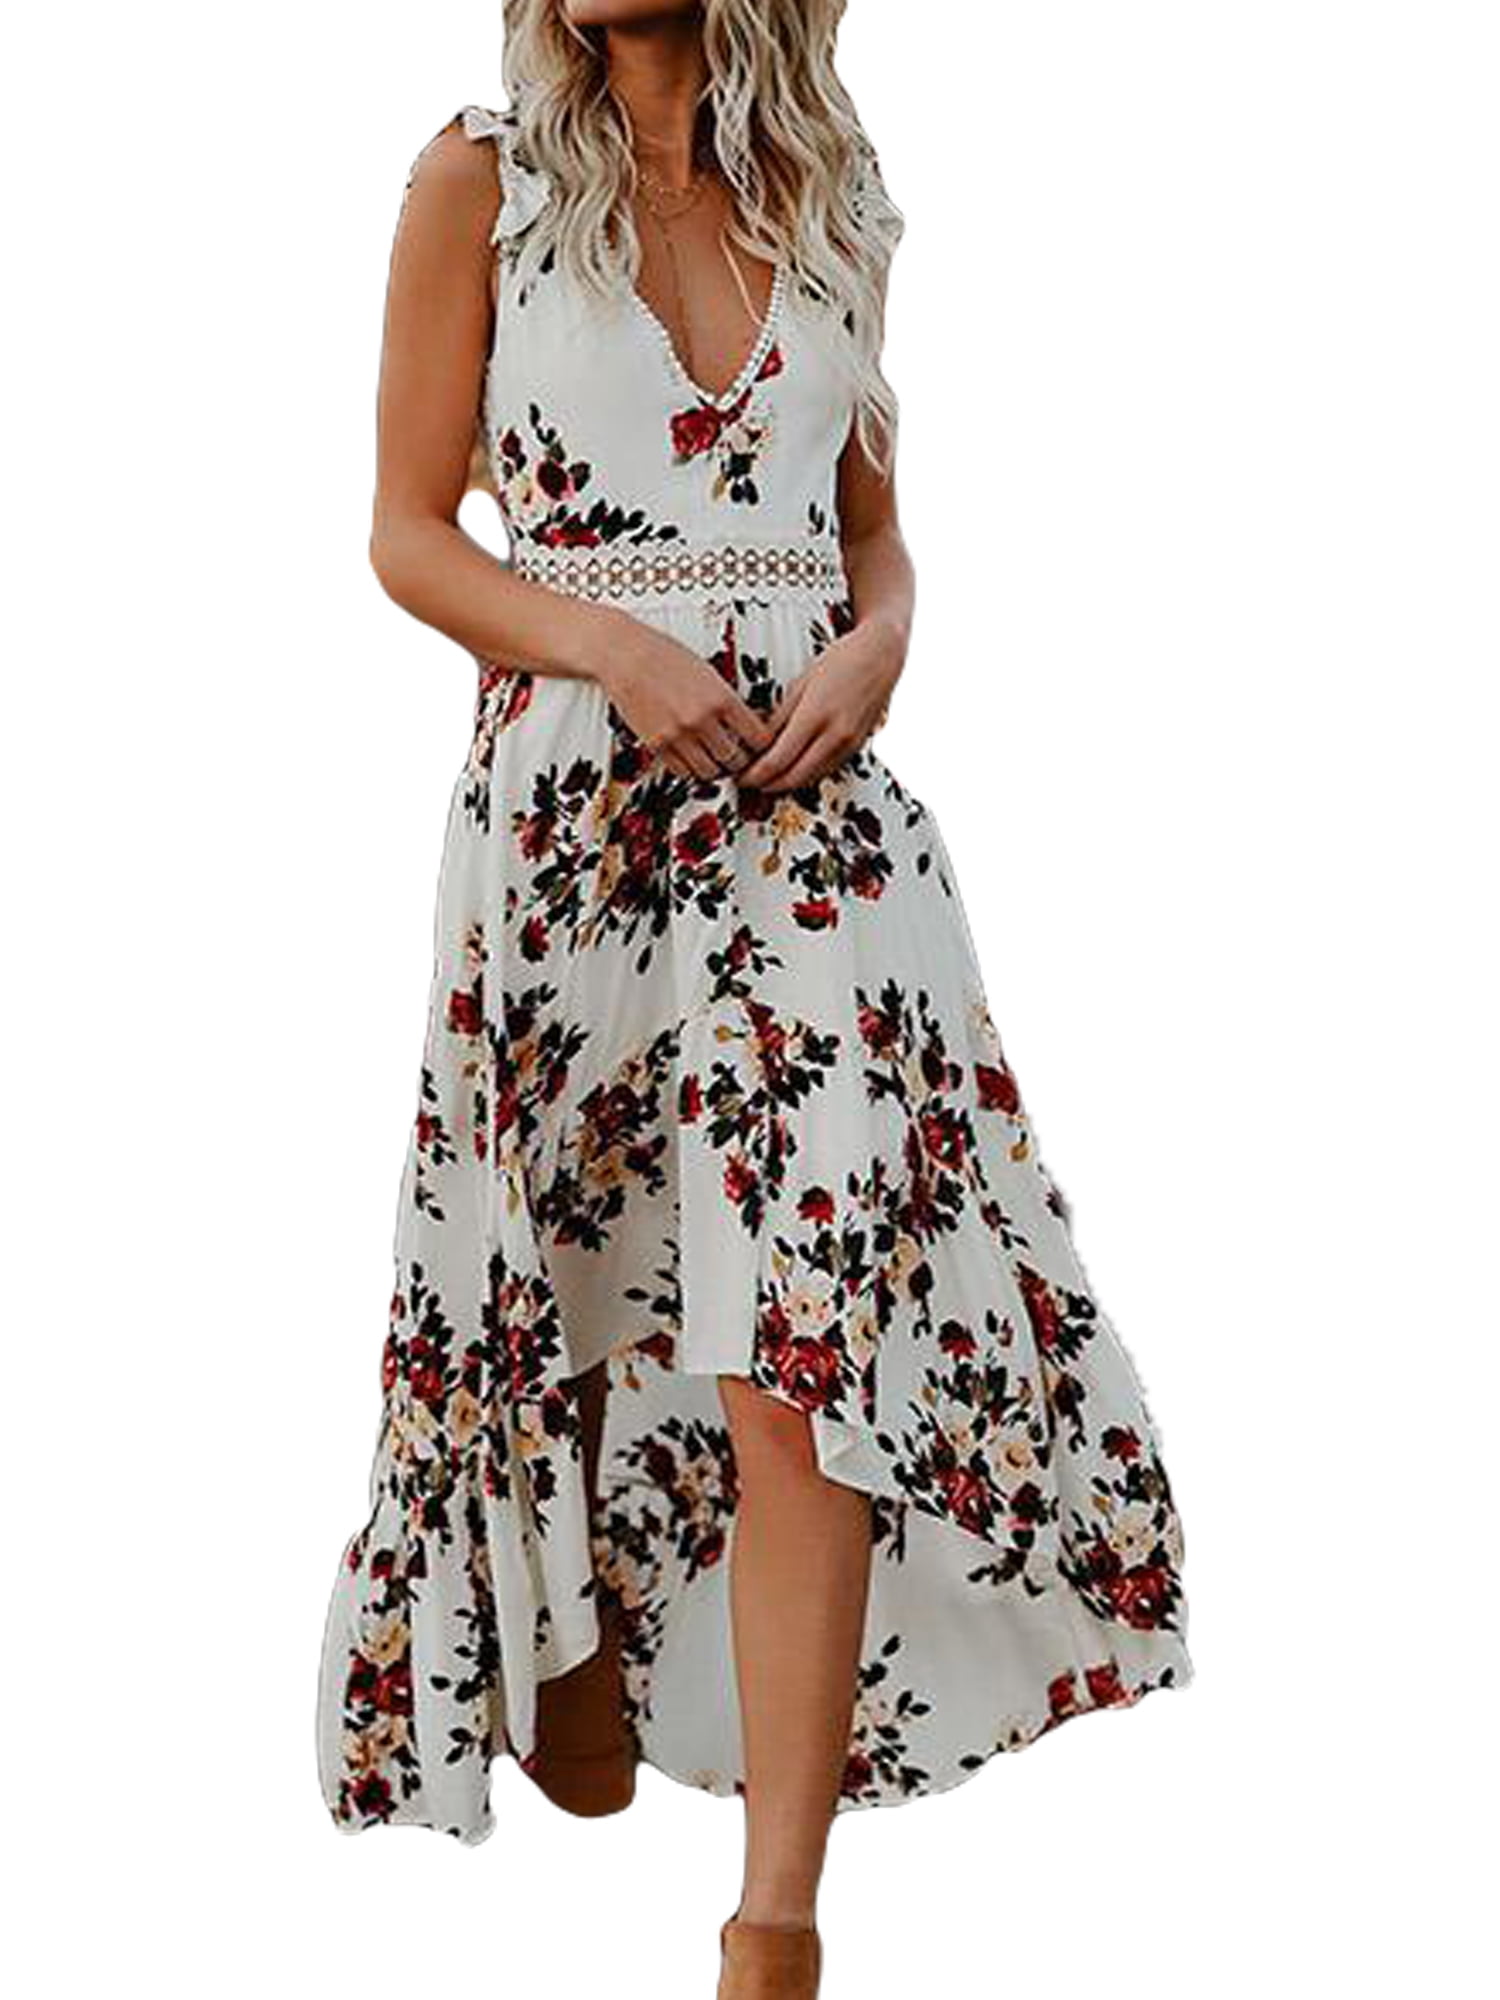 ❤️ Women's Boho Floral Summer Beach Long Sling Dress Party Maxi Strappy Sundress